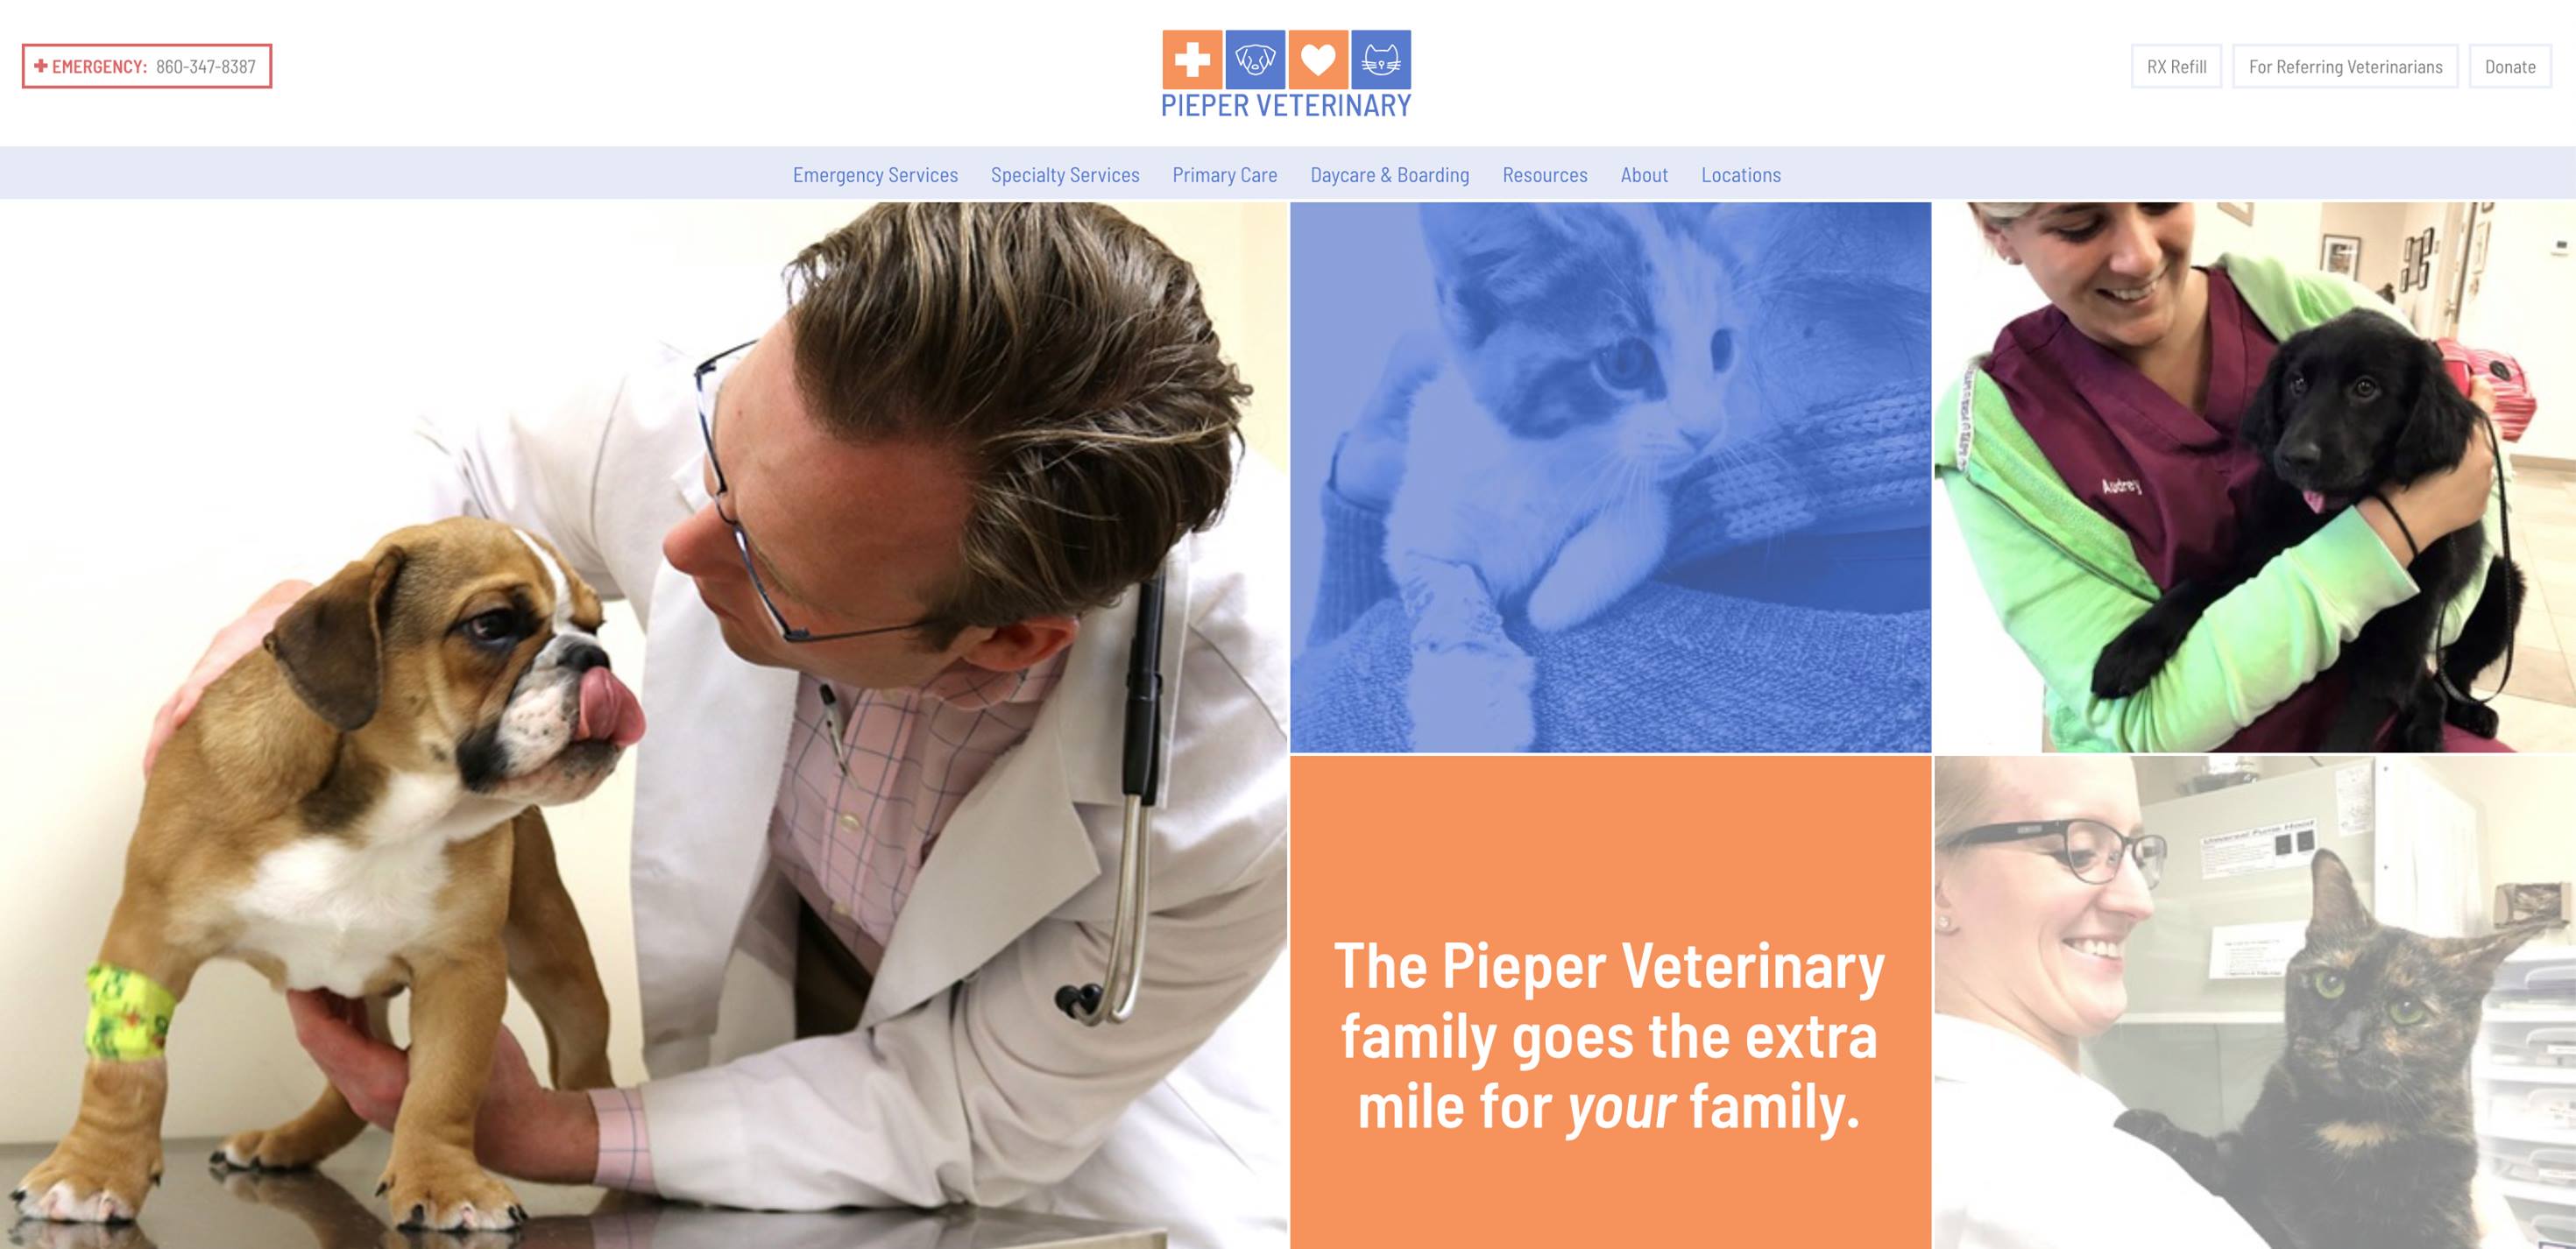 Pieper Veterinary | 24-Hour Animal Hospital & Primary Care